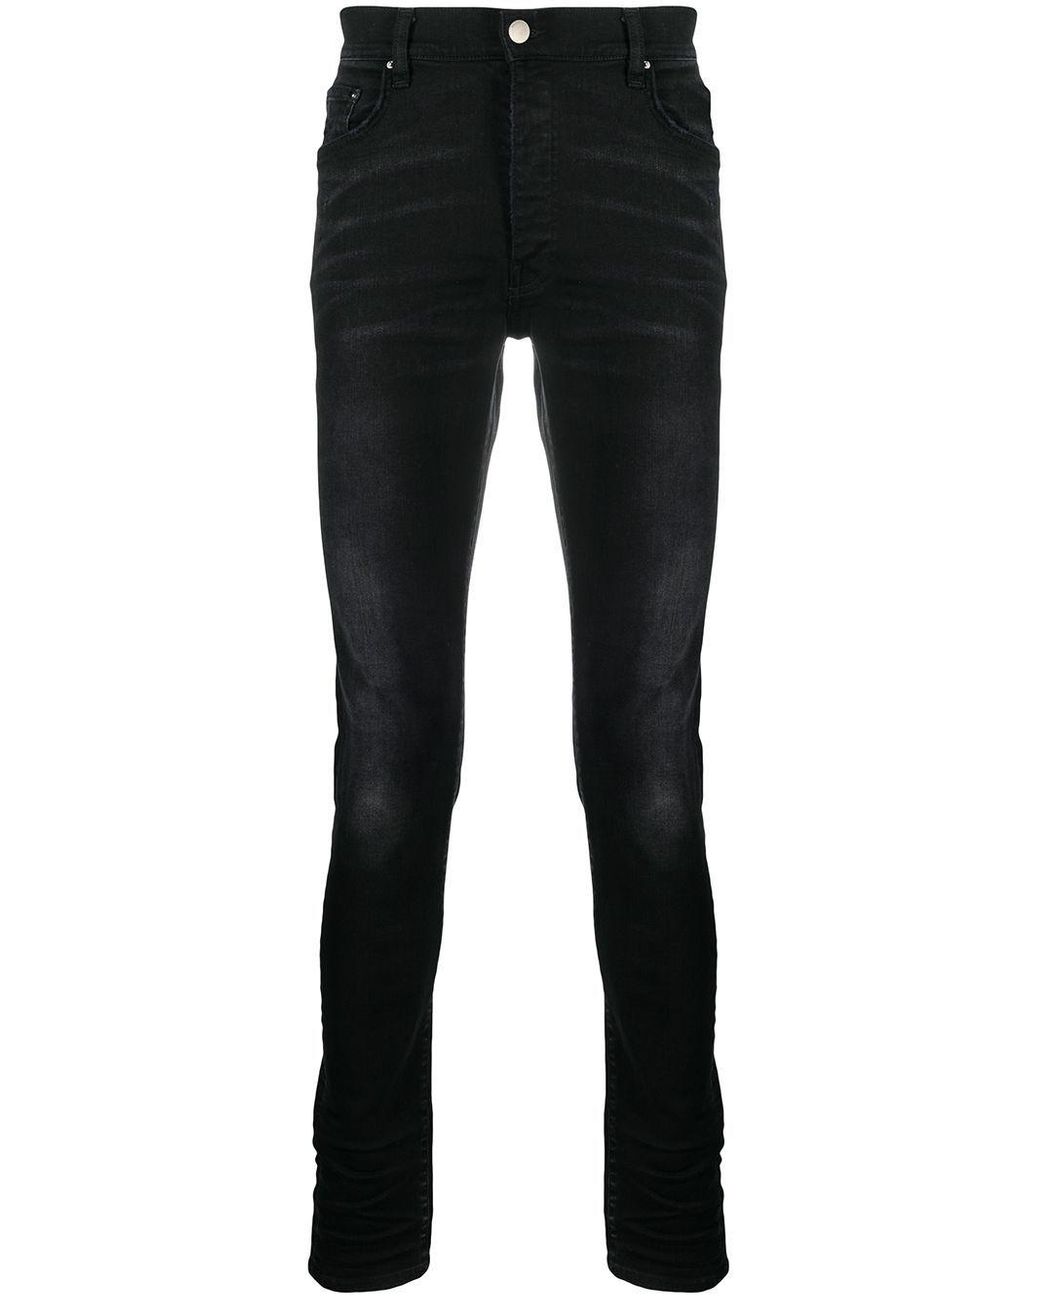 Amiri Denim Slim-fit Jeans in Black for Men - Lyst